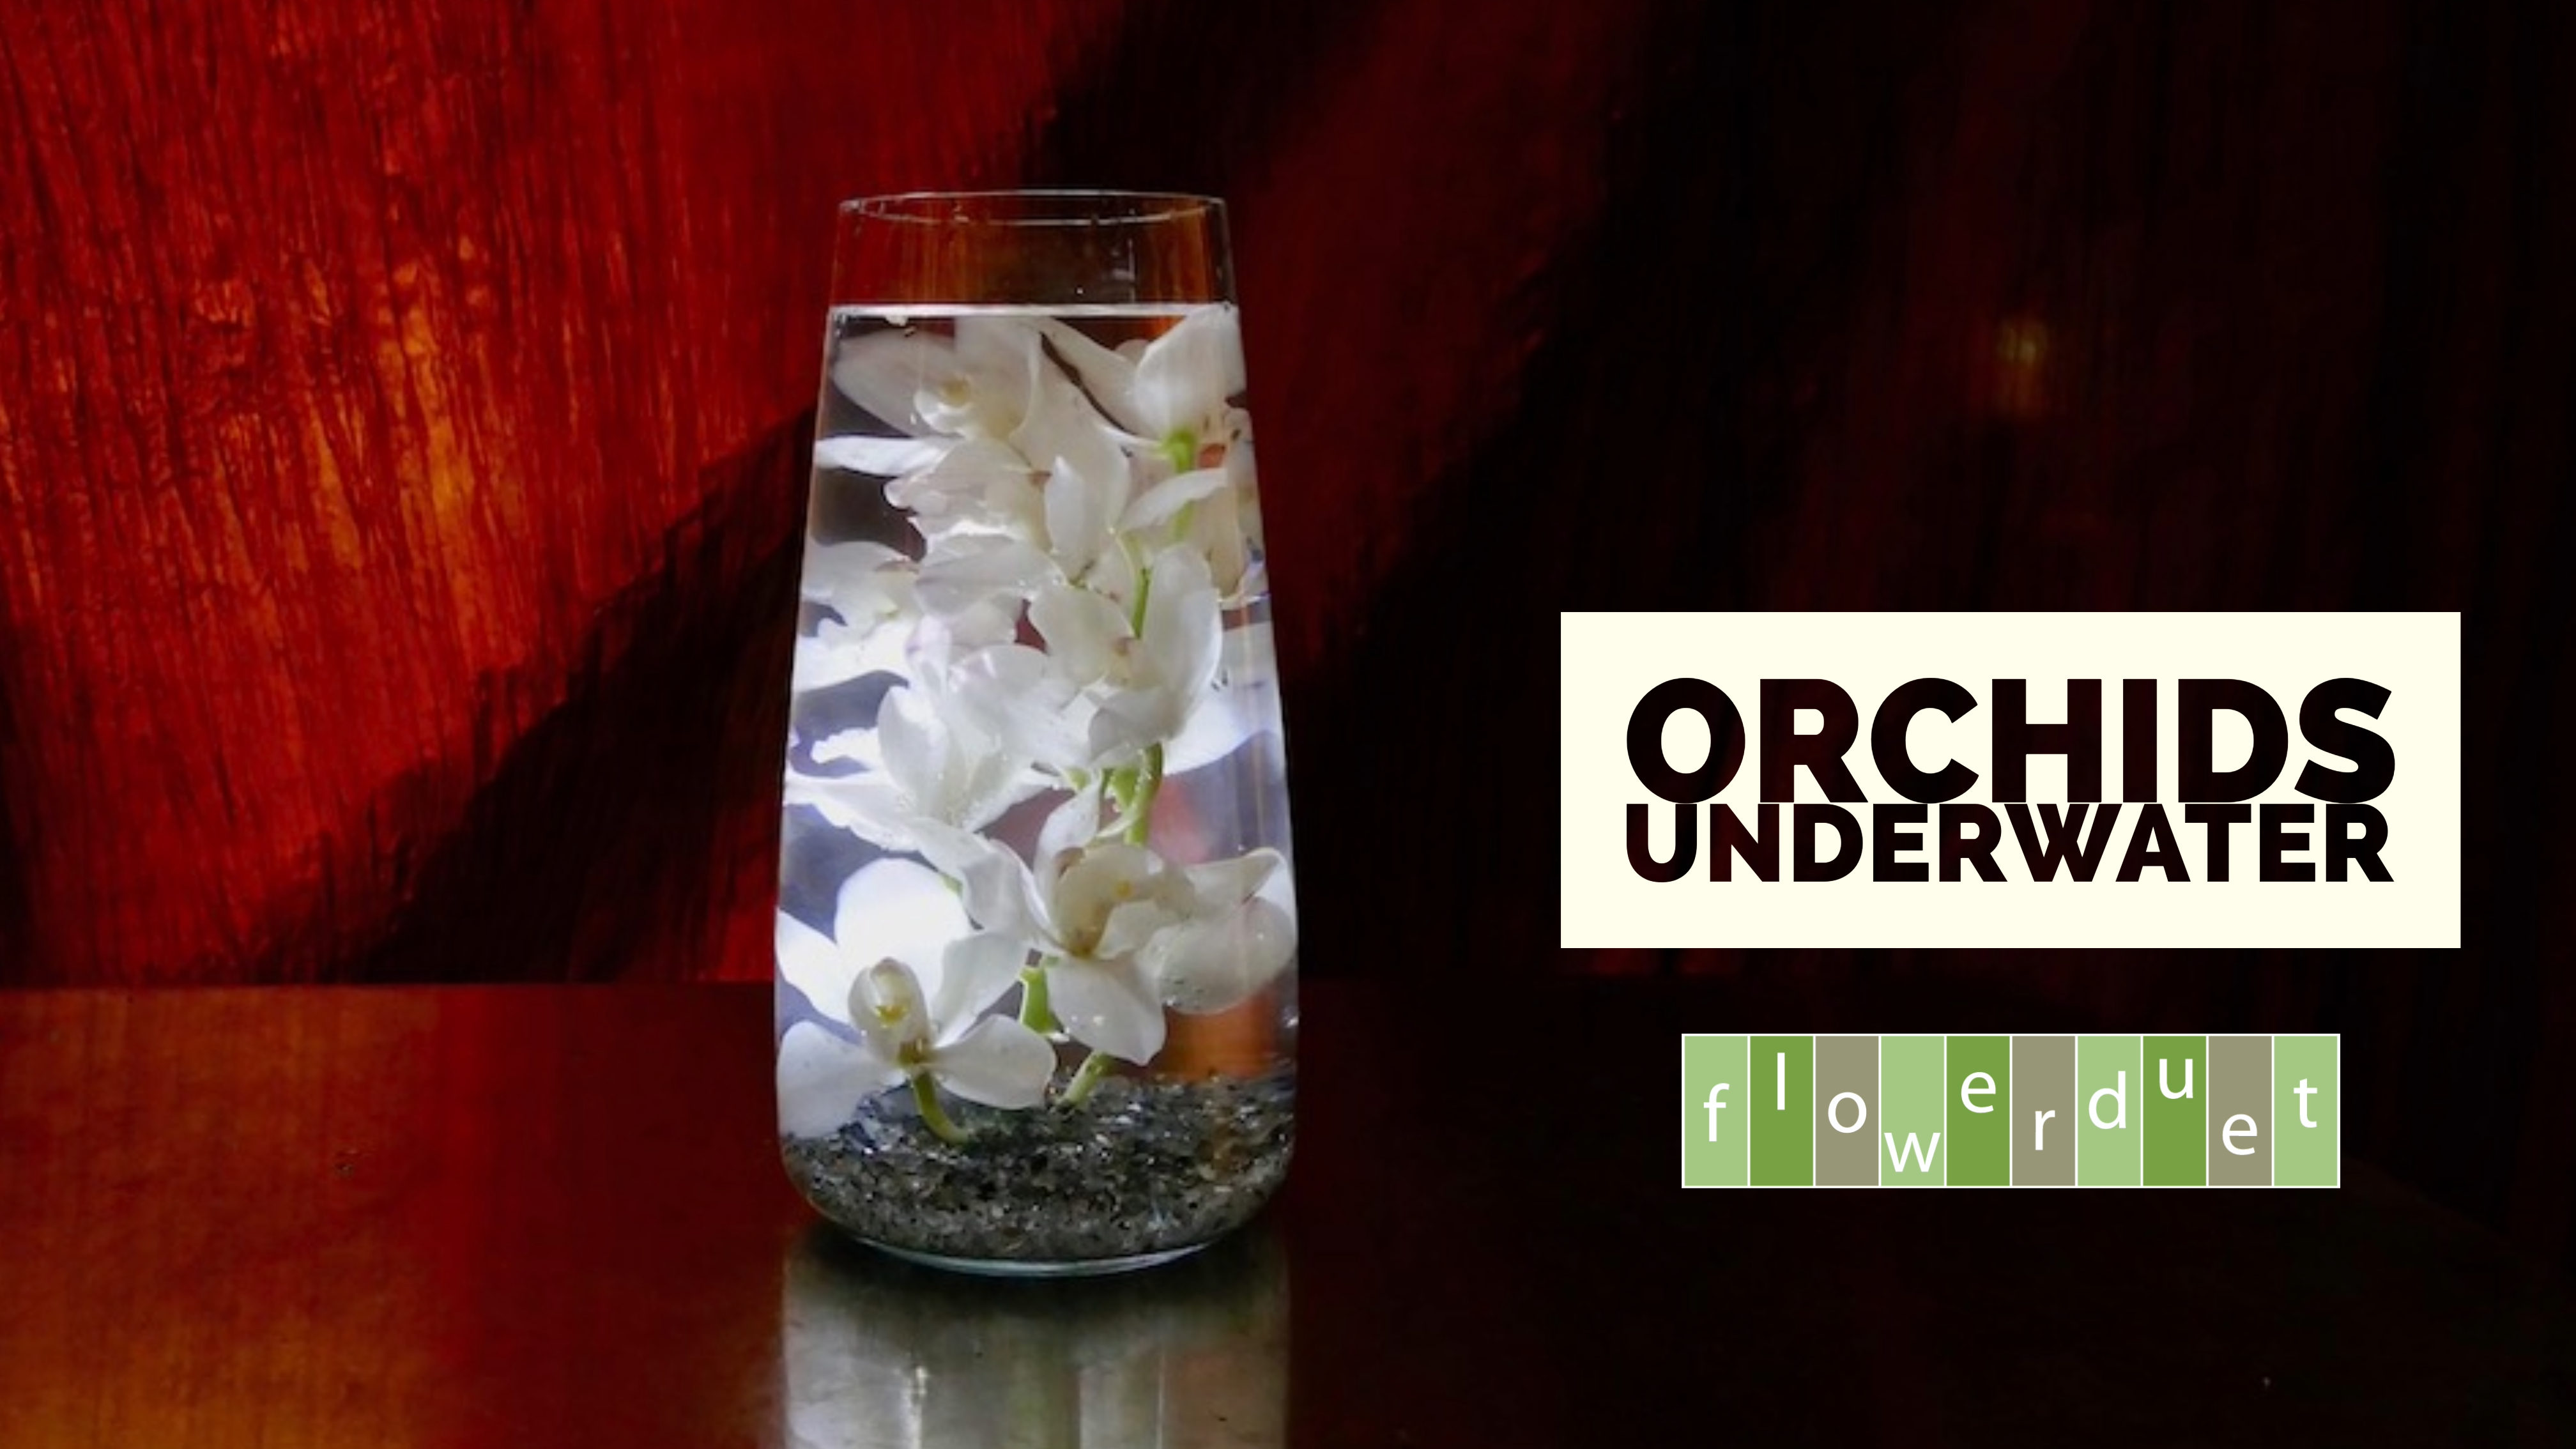 Orchids underwater in a vase